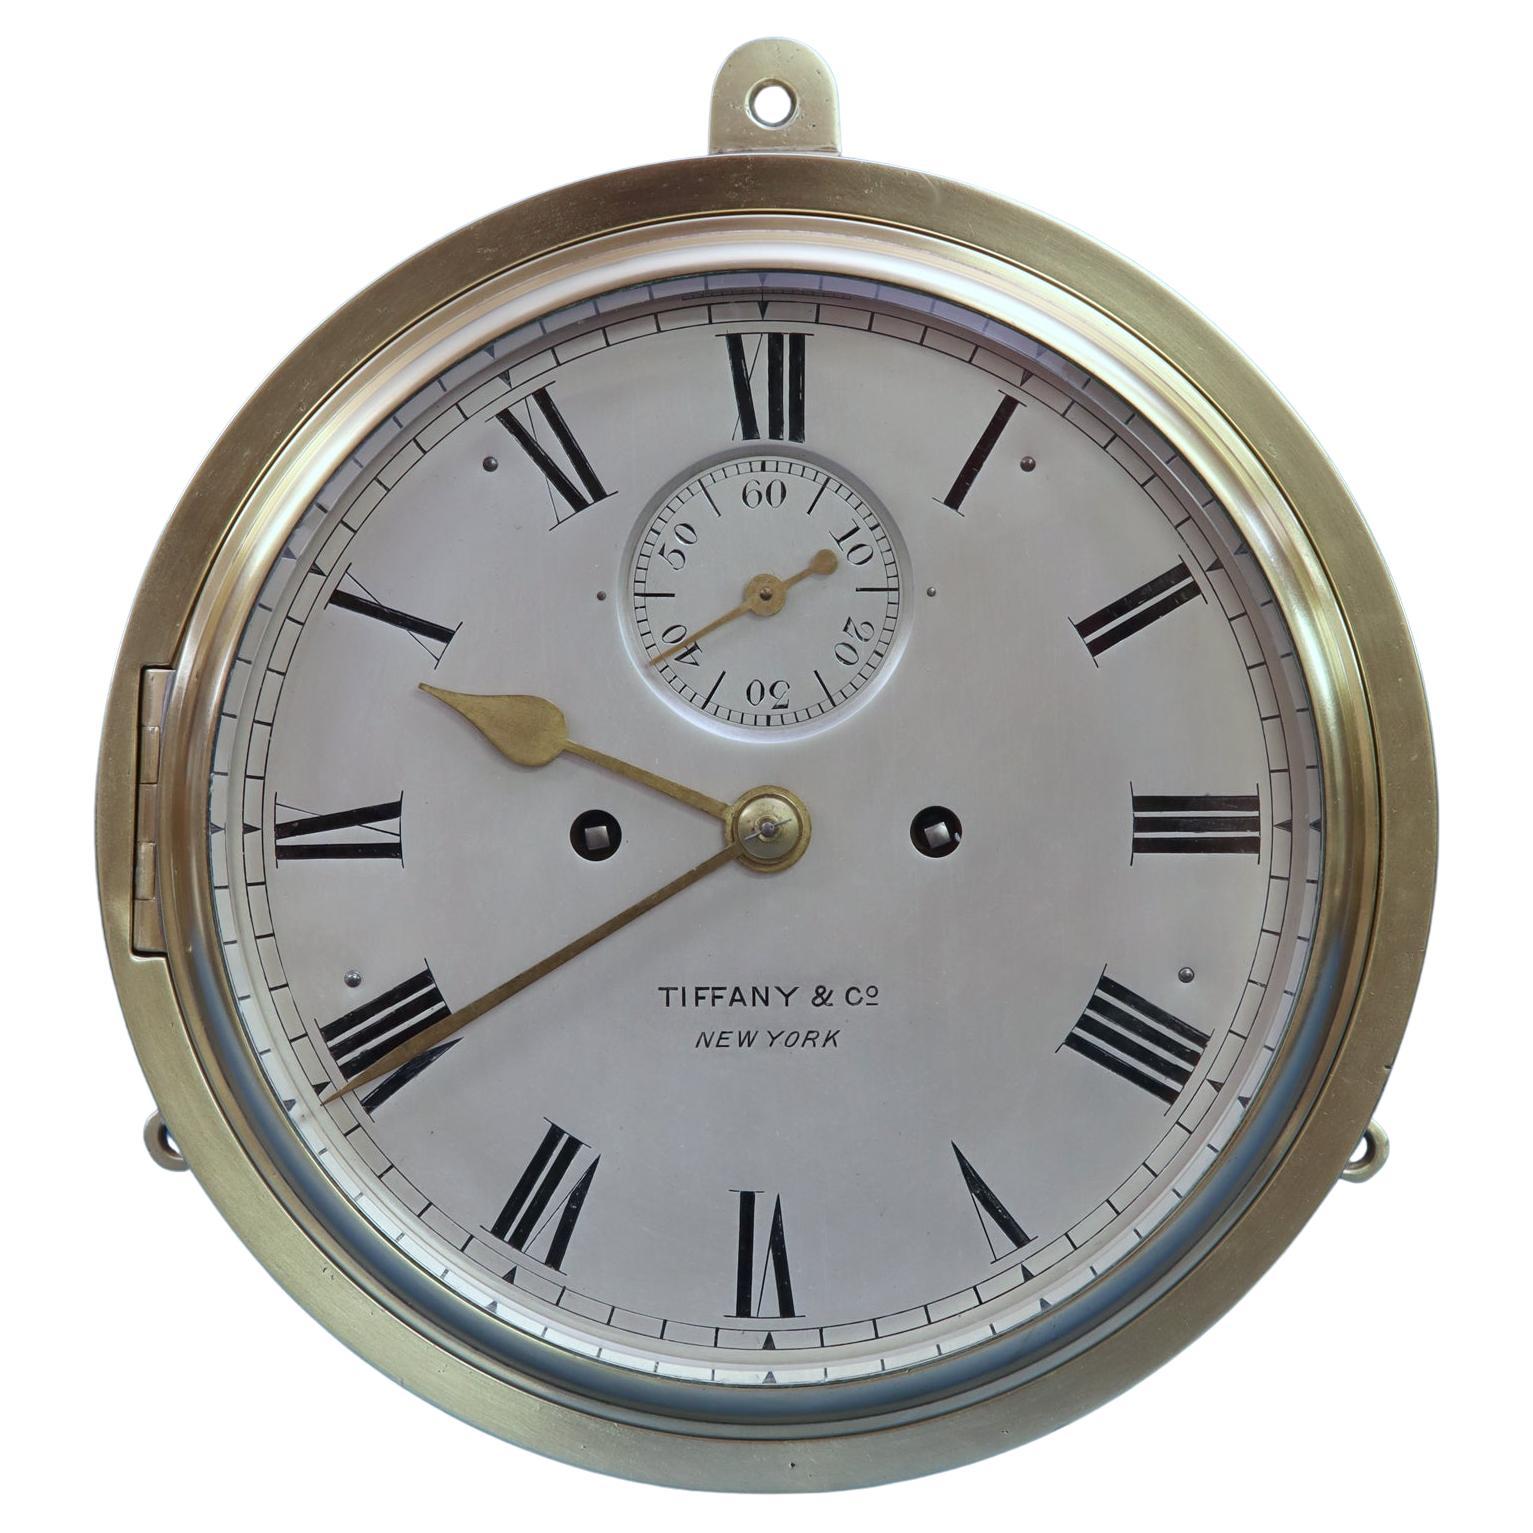 Late Victorian English Bulkhead Clock with Dog’s Watch Ship's Strike.